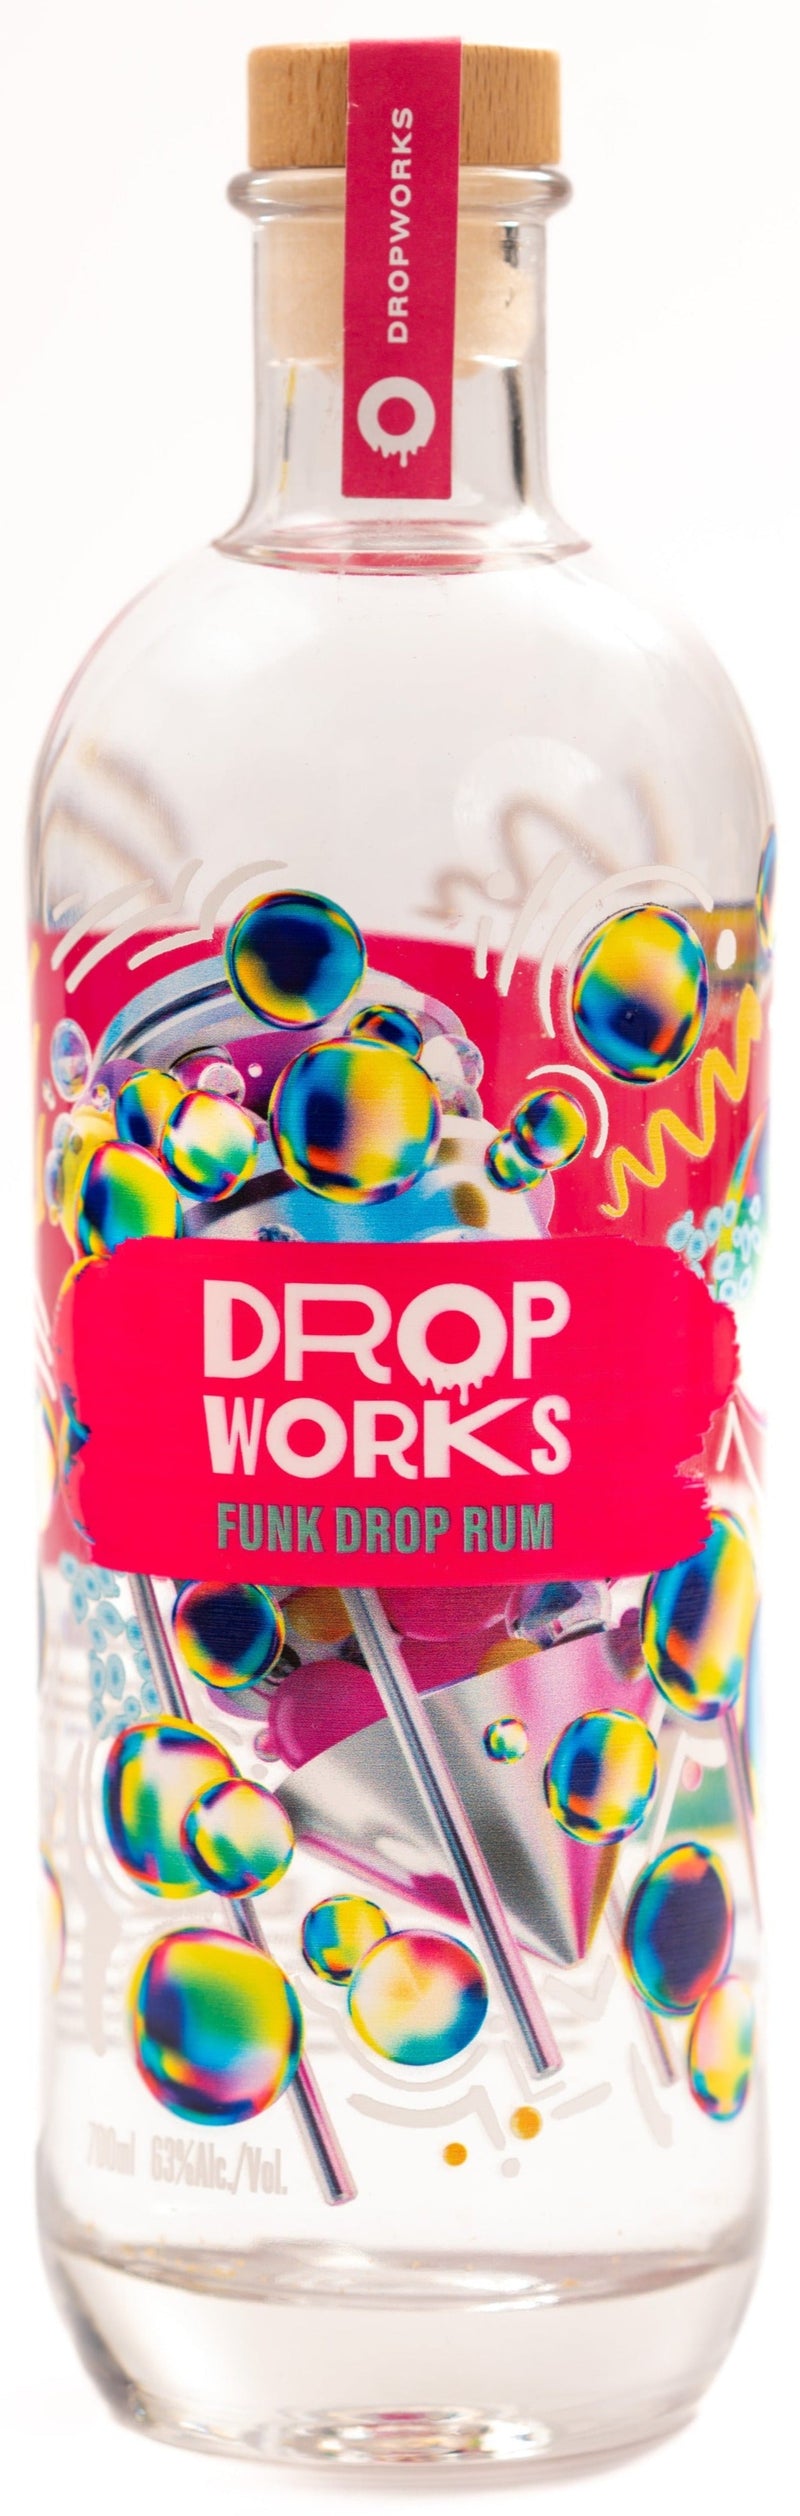 Dropworks Funk Drop Rum 70cl